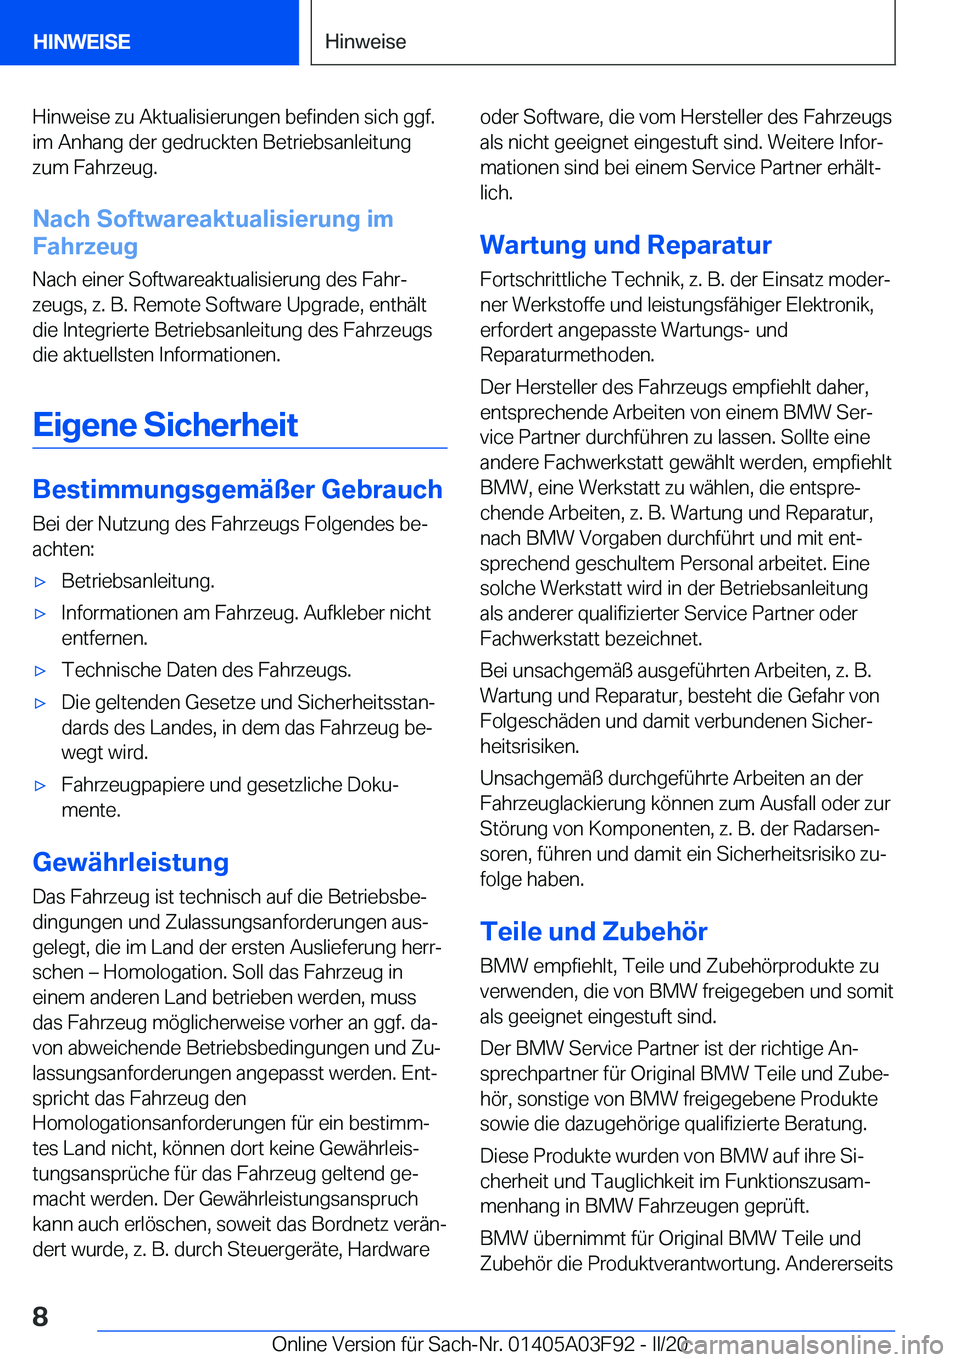 BMW 3 SERIES 2020  Betriebsanleitungen (in German) �H�i�n�w�e�i�s�e��z�u��A�k�t�u�a�l�i�s�i�e�r�u�n�g�e�n��b�e�f�i�n�d�e�n��s�i�c�h��g�g�f�.�i�m��A�n�h�a�n�g��d�e�r��g�e�d�r�u�c�k�t�e�n��B�e�t�r�i�e�b�s�a�n�l�e�i�t�u�n�g�z�u�m��F�a�h�r�z�e�u